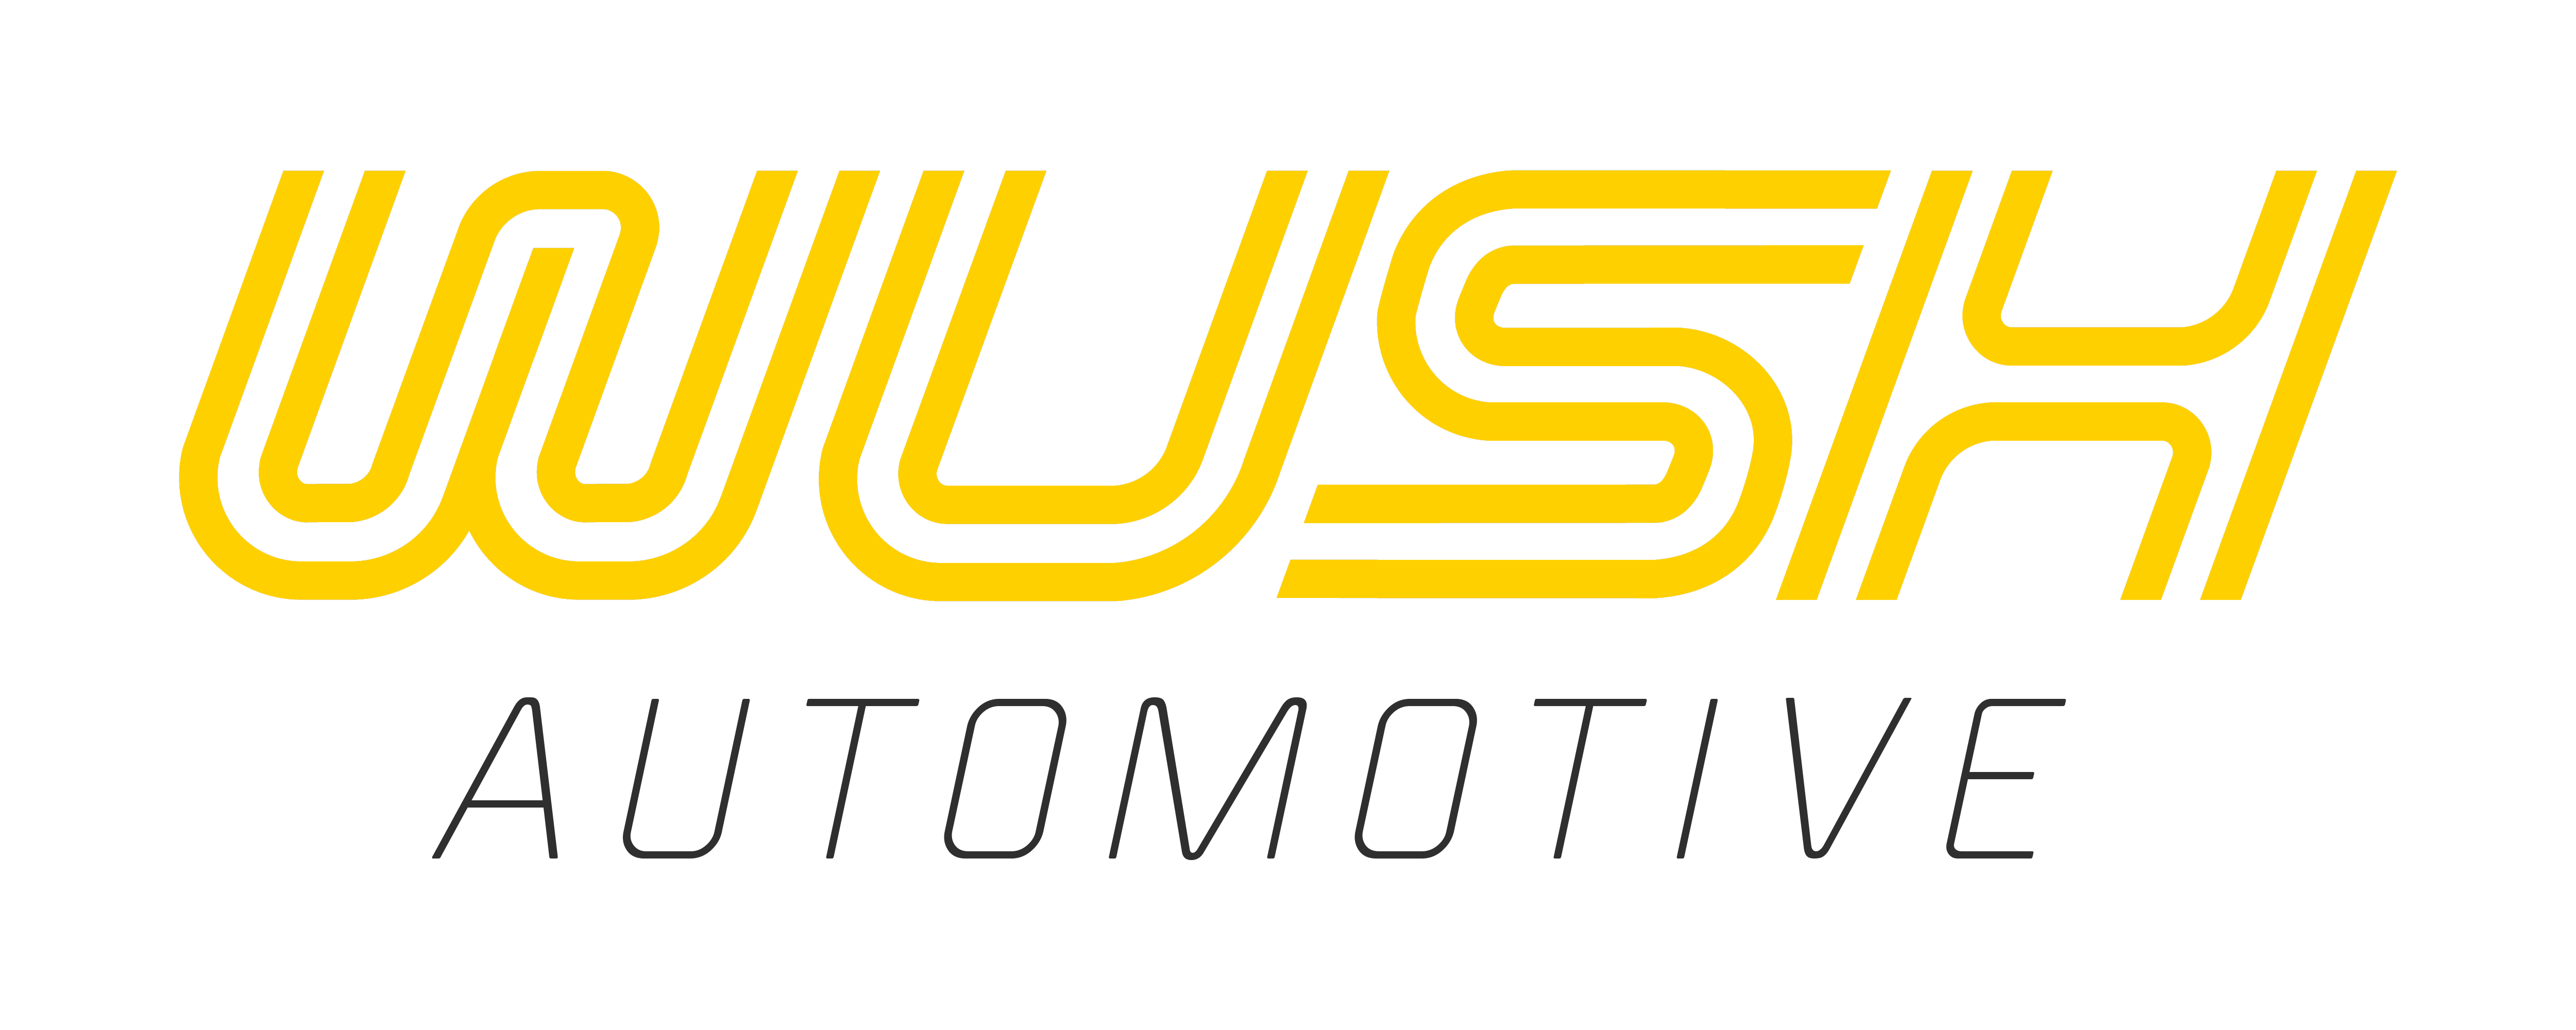 Wush Automotive | Global Aftermarket Supplier